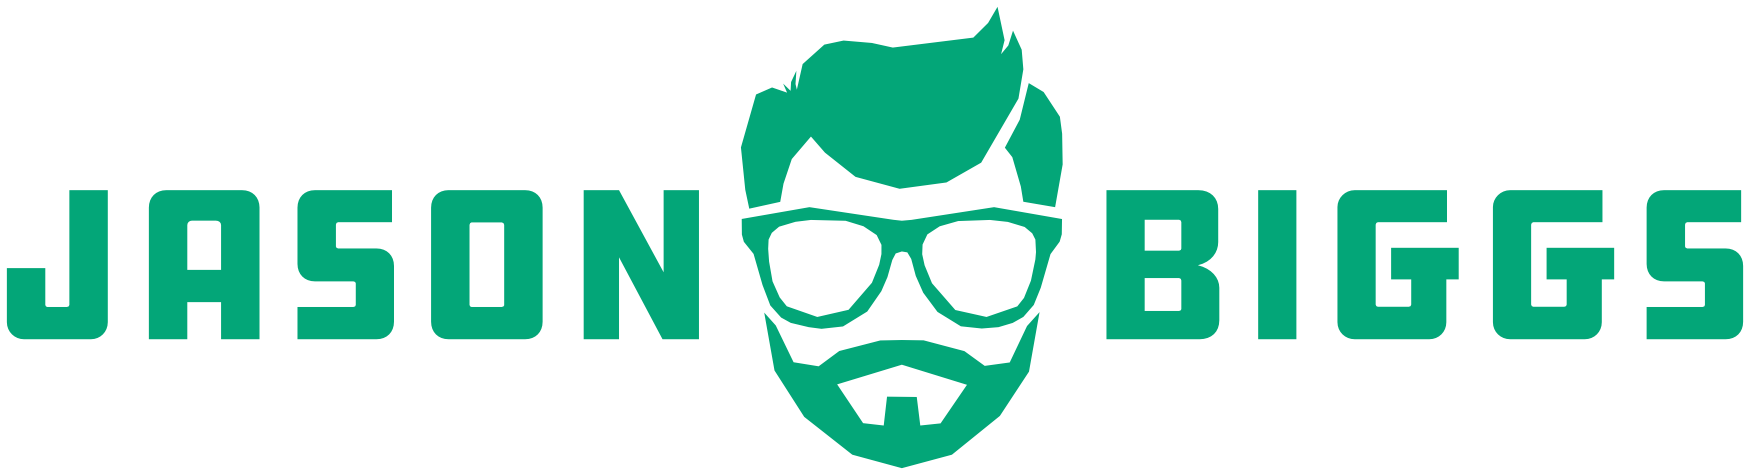 Jason Biggs's Development Portfolio combined logo